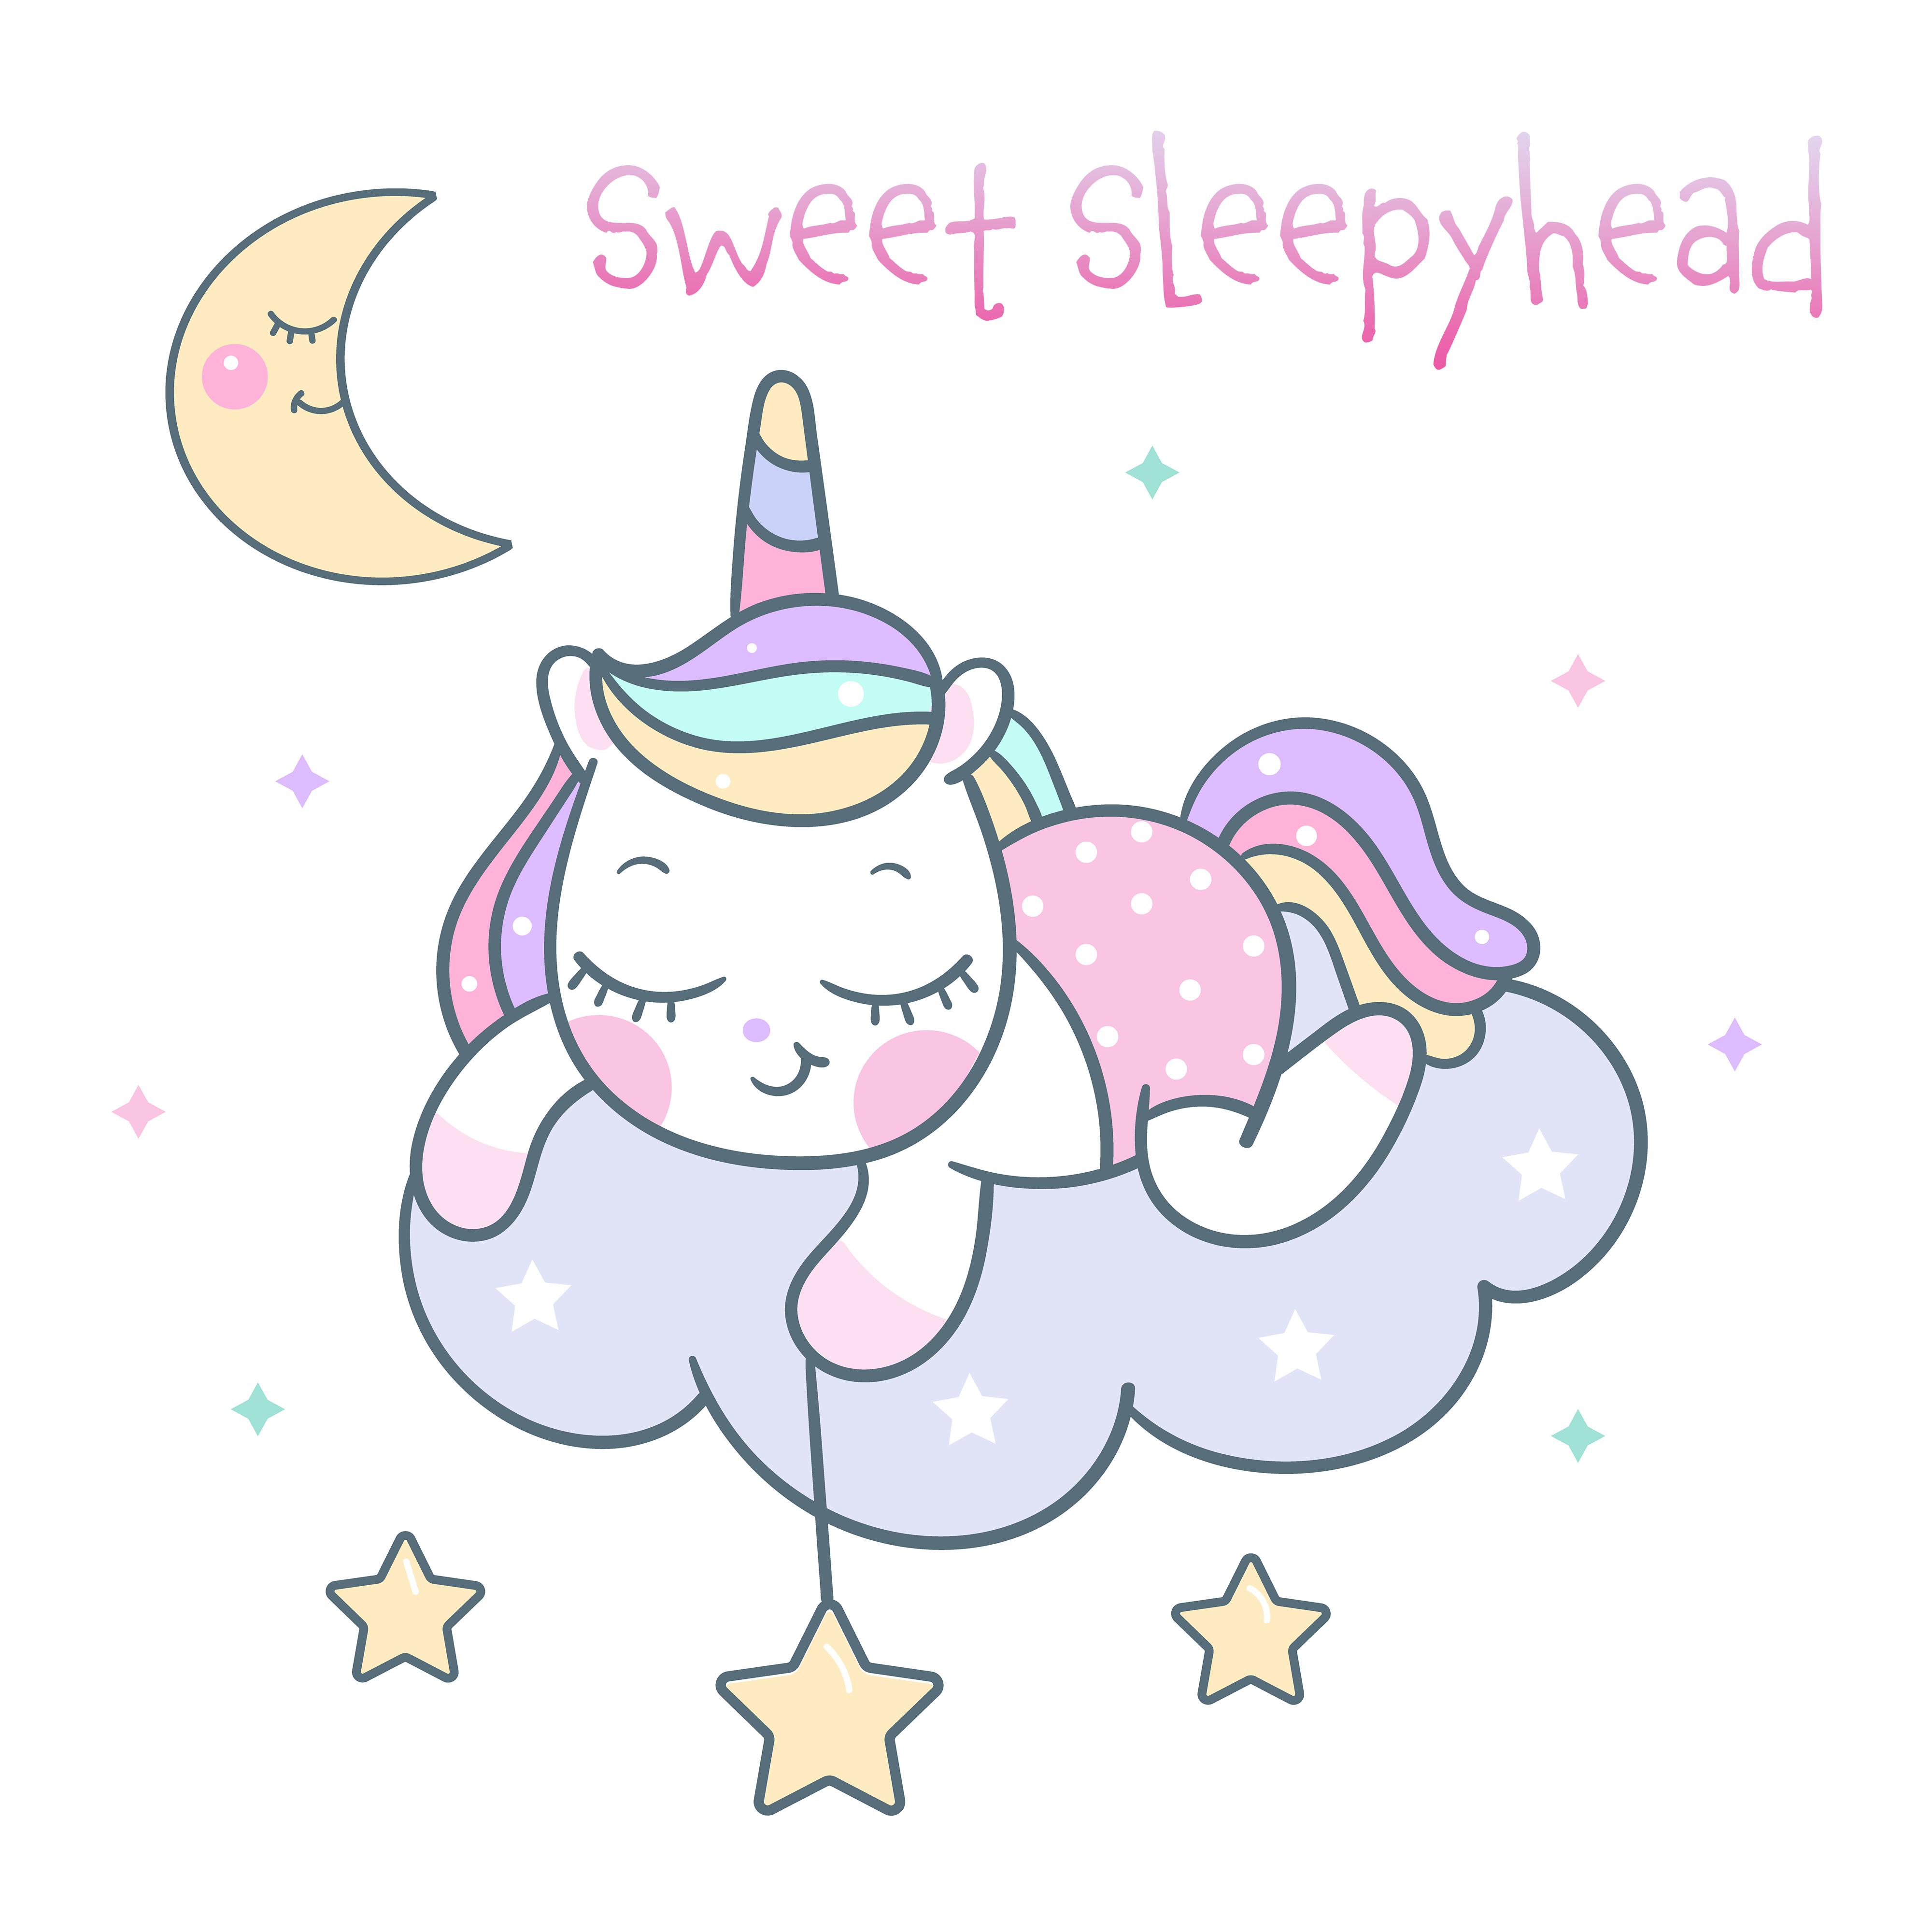 Sweet Sleepyhead - Music for Sleep and Naps for Your Baby